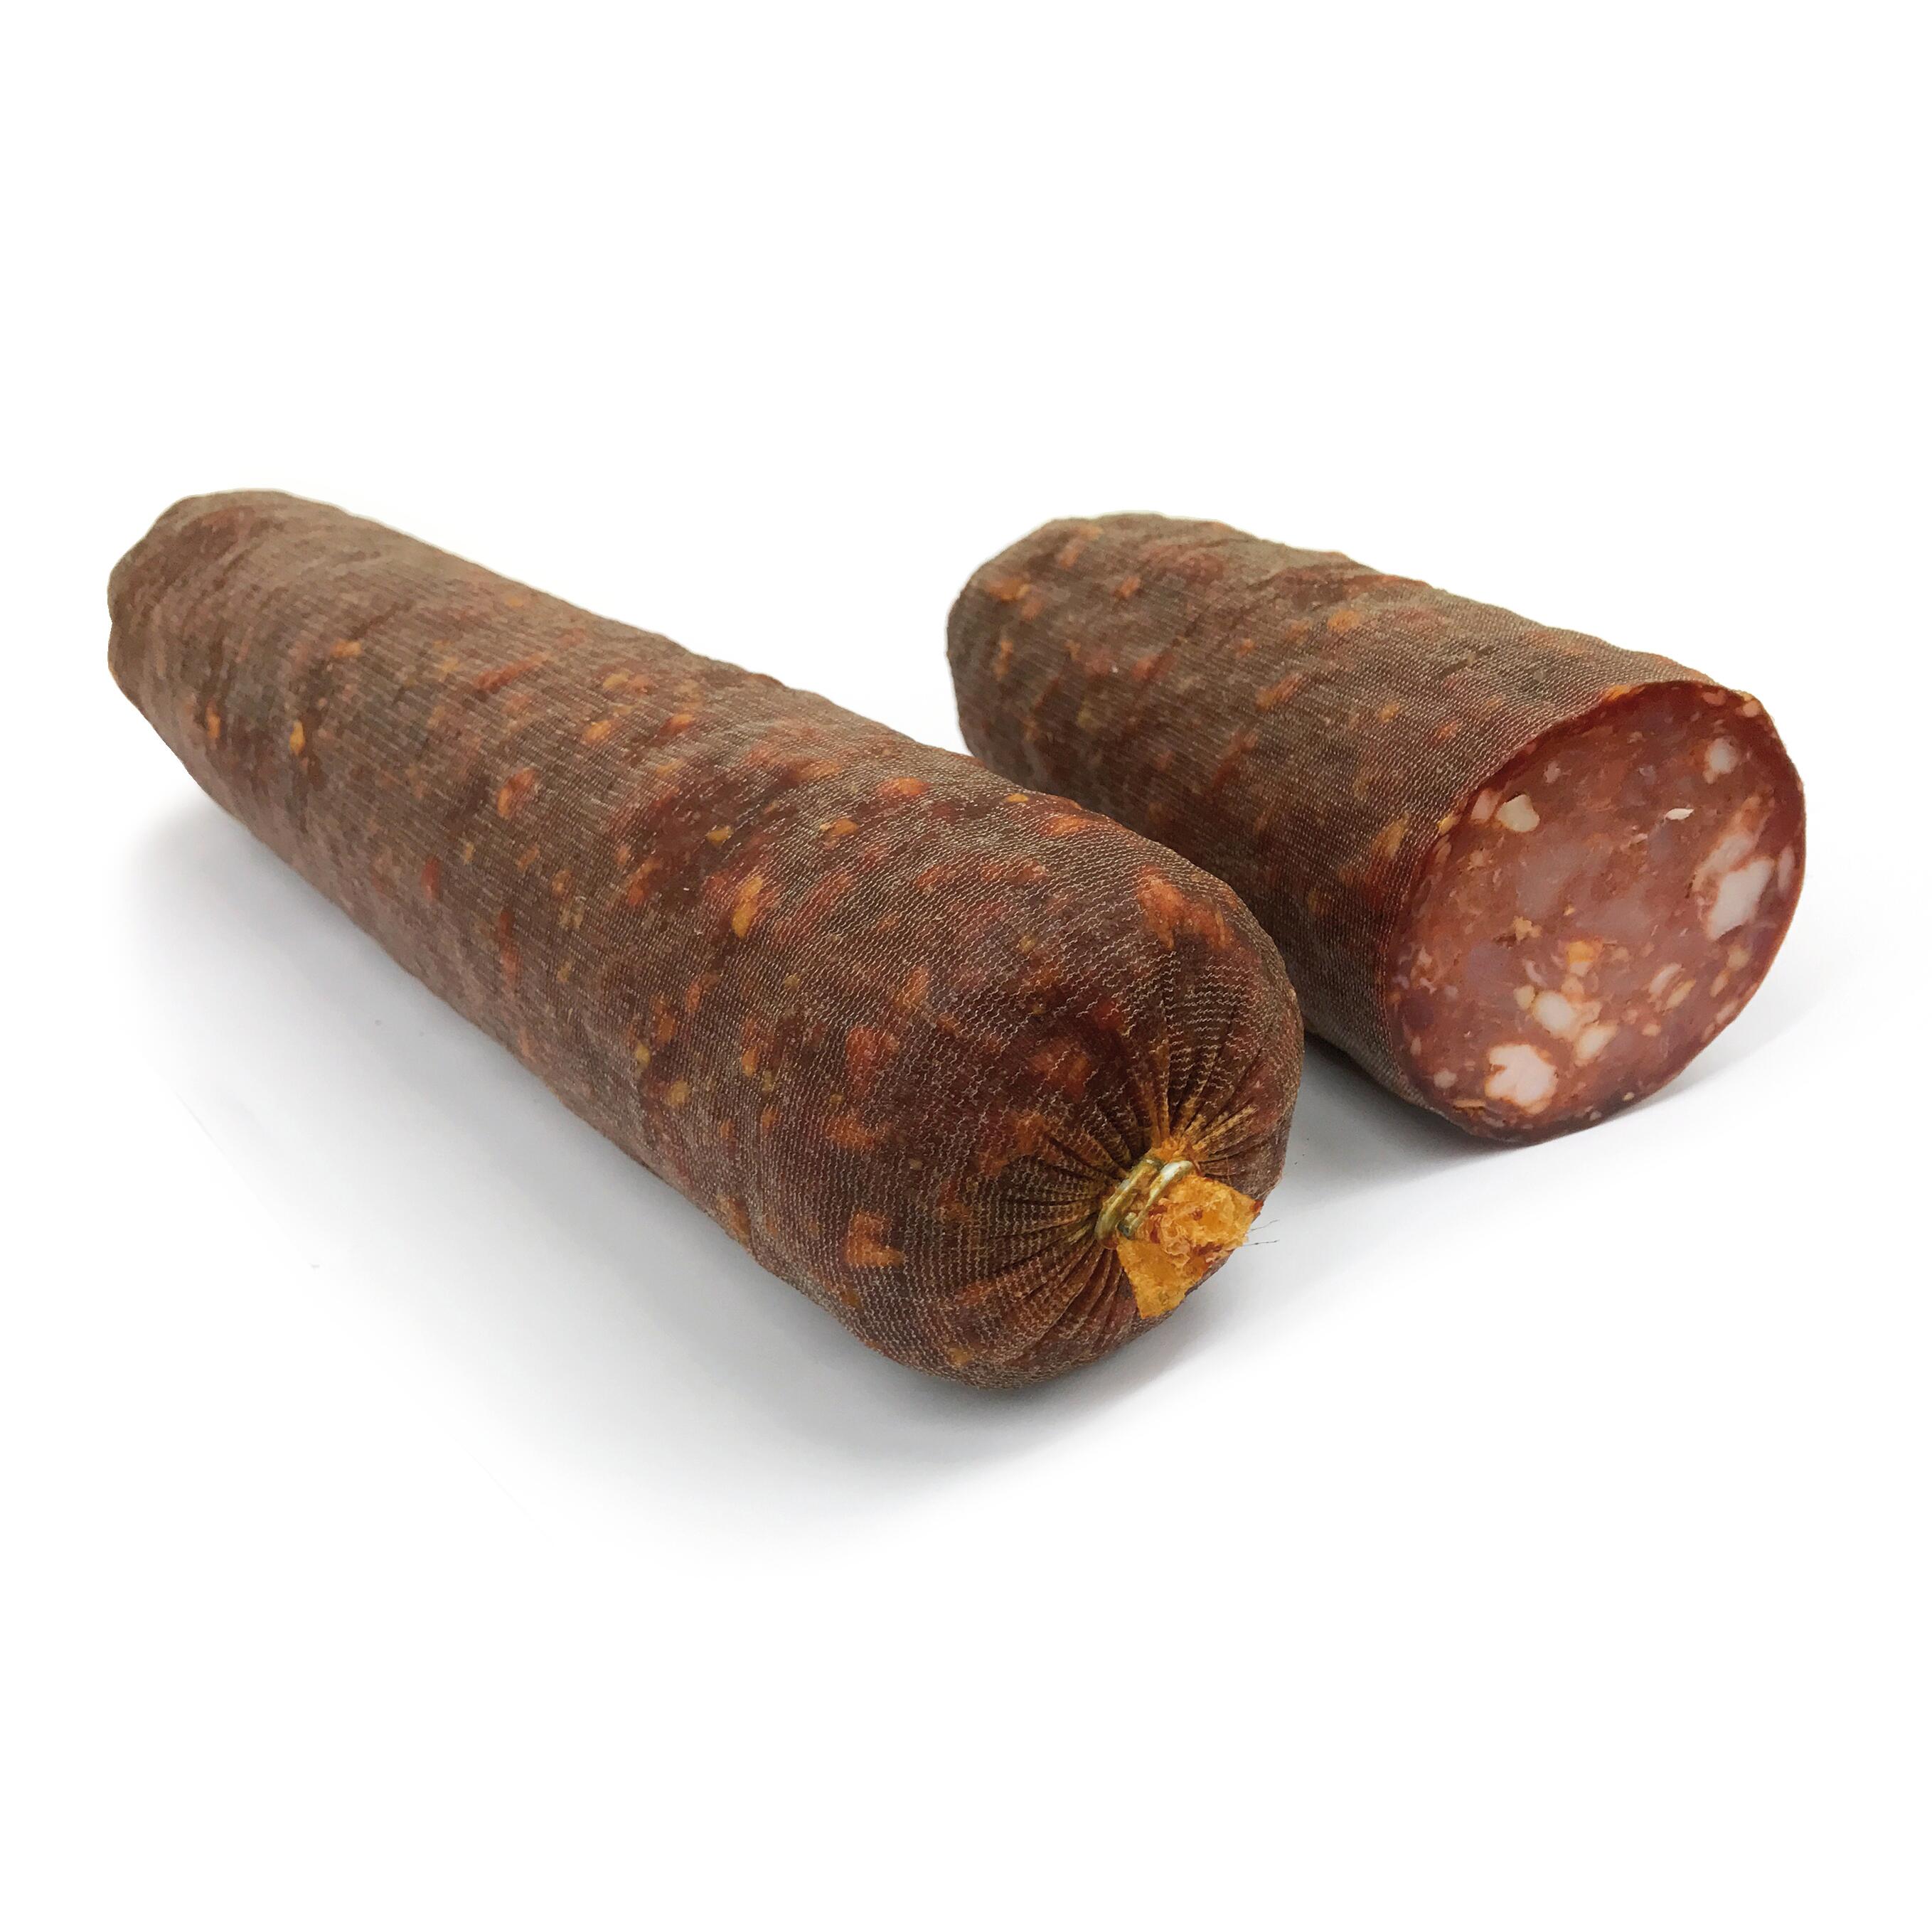 Meat products, Chorizo sausage whole, +/- 1.8 Kg